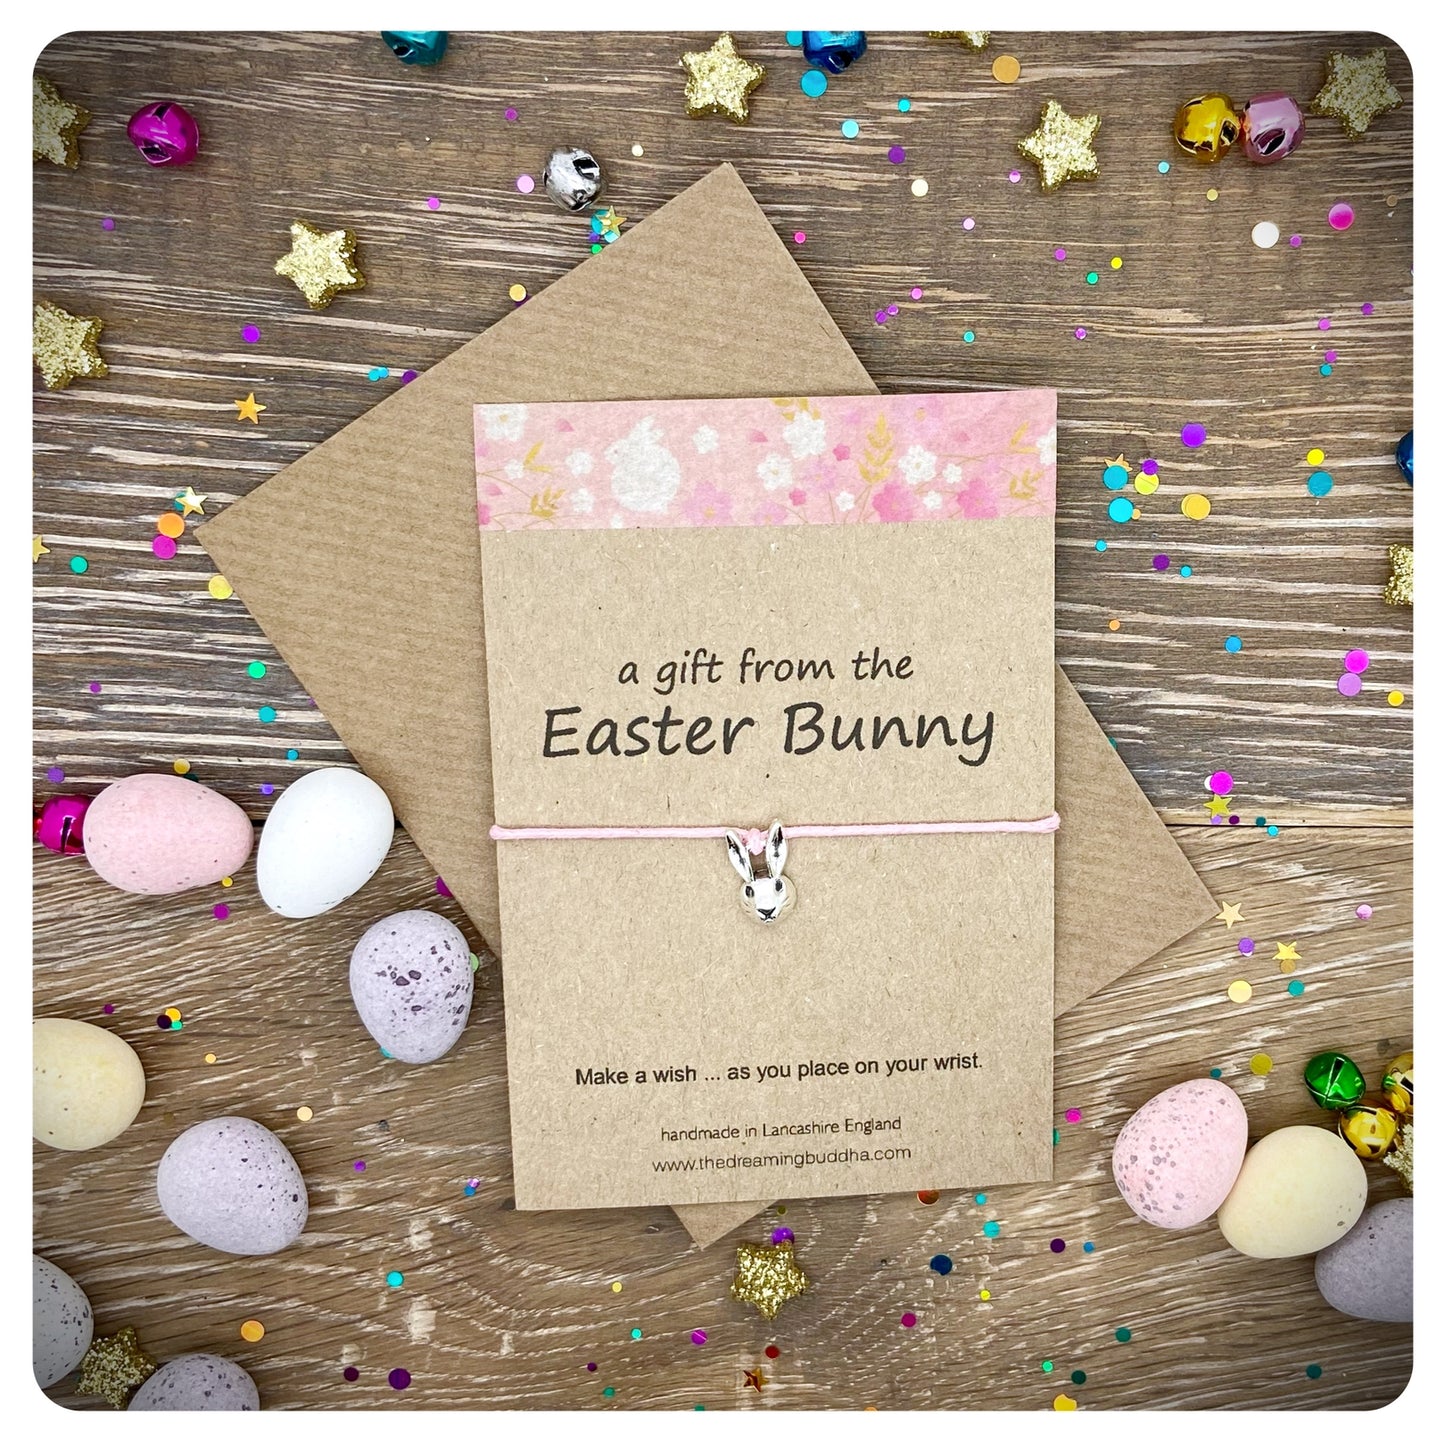 Pack Of Four Easter Bunny Wish Bracelet Cards, Easter Egg Hunt Prizes, Easter Letterbox Gifts, Rabbit Friendship Bracelets